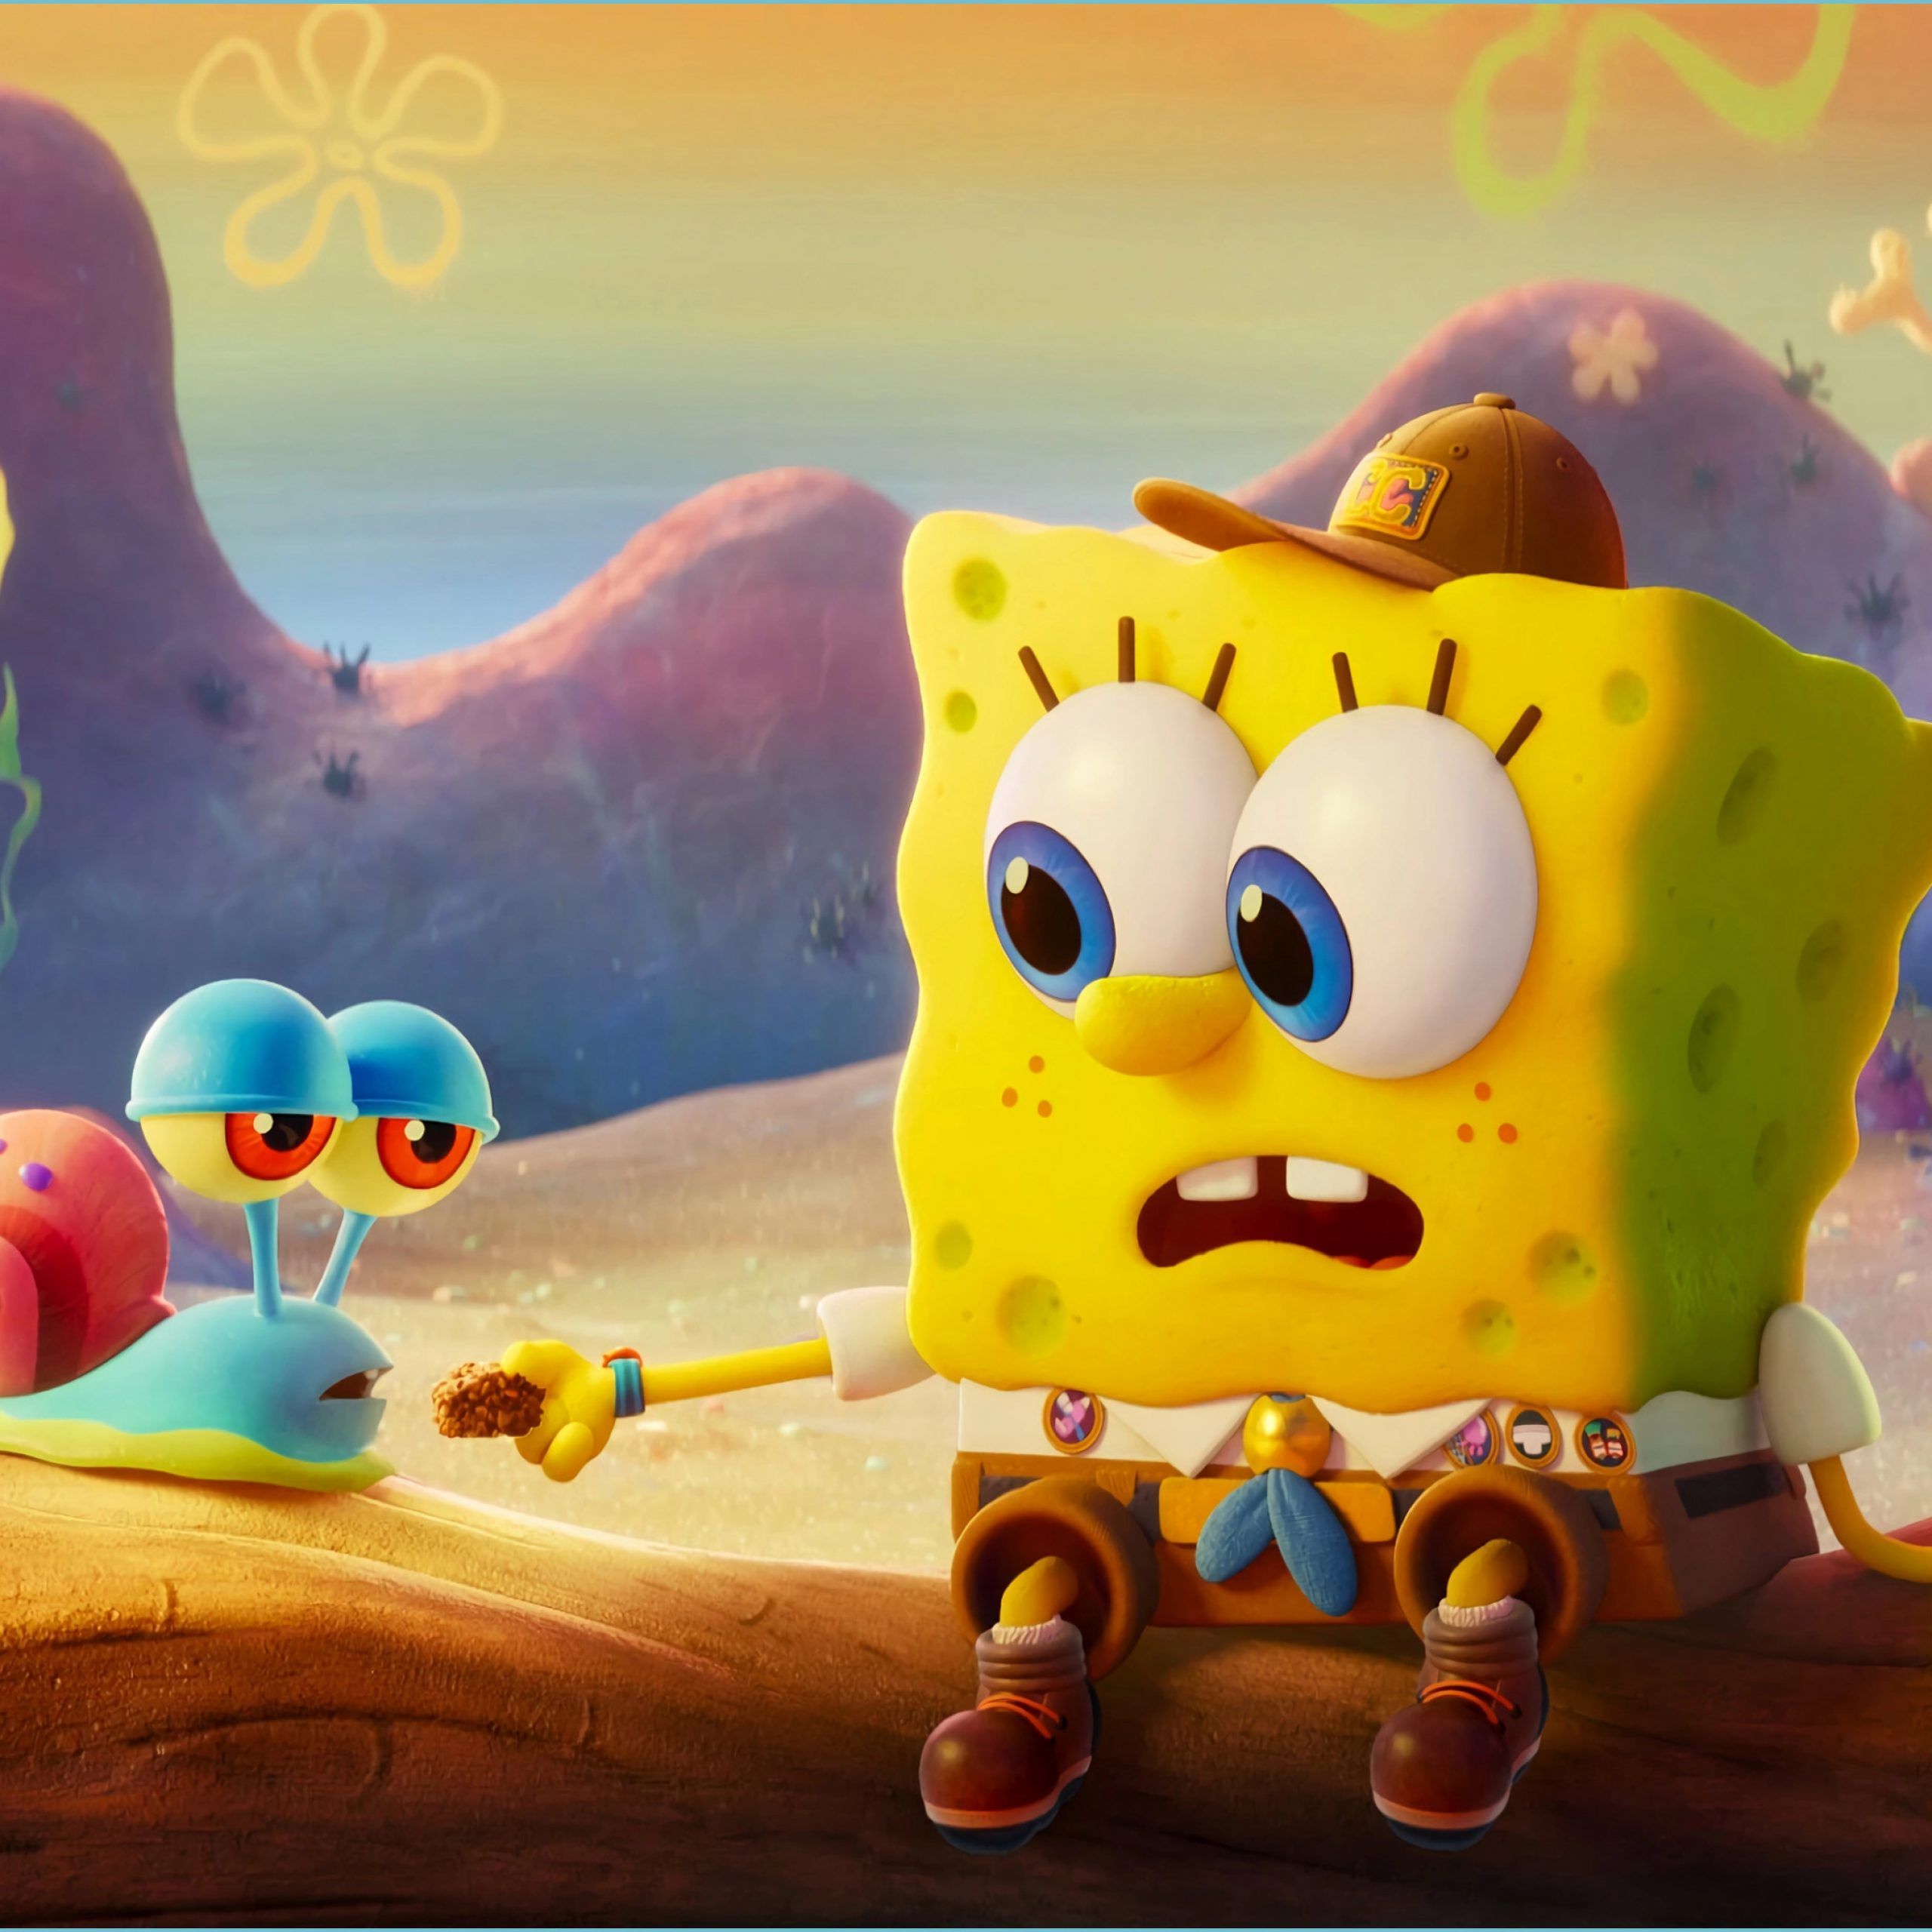 Baby Patrick And Spongebob Wallpapers